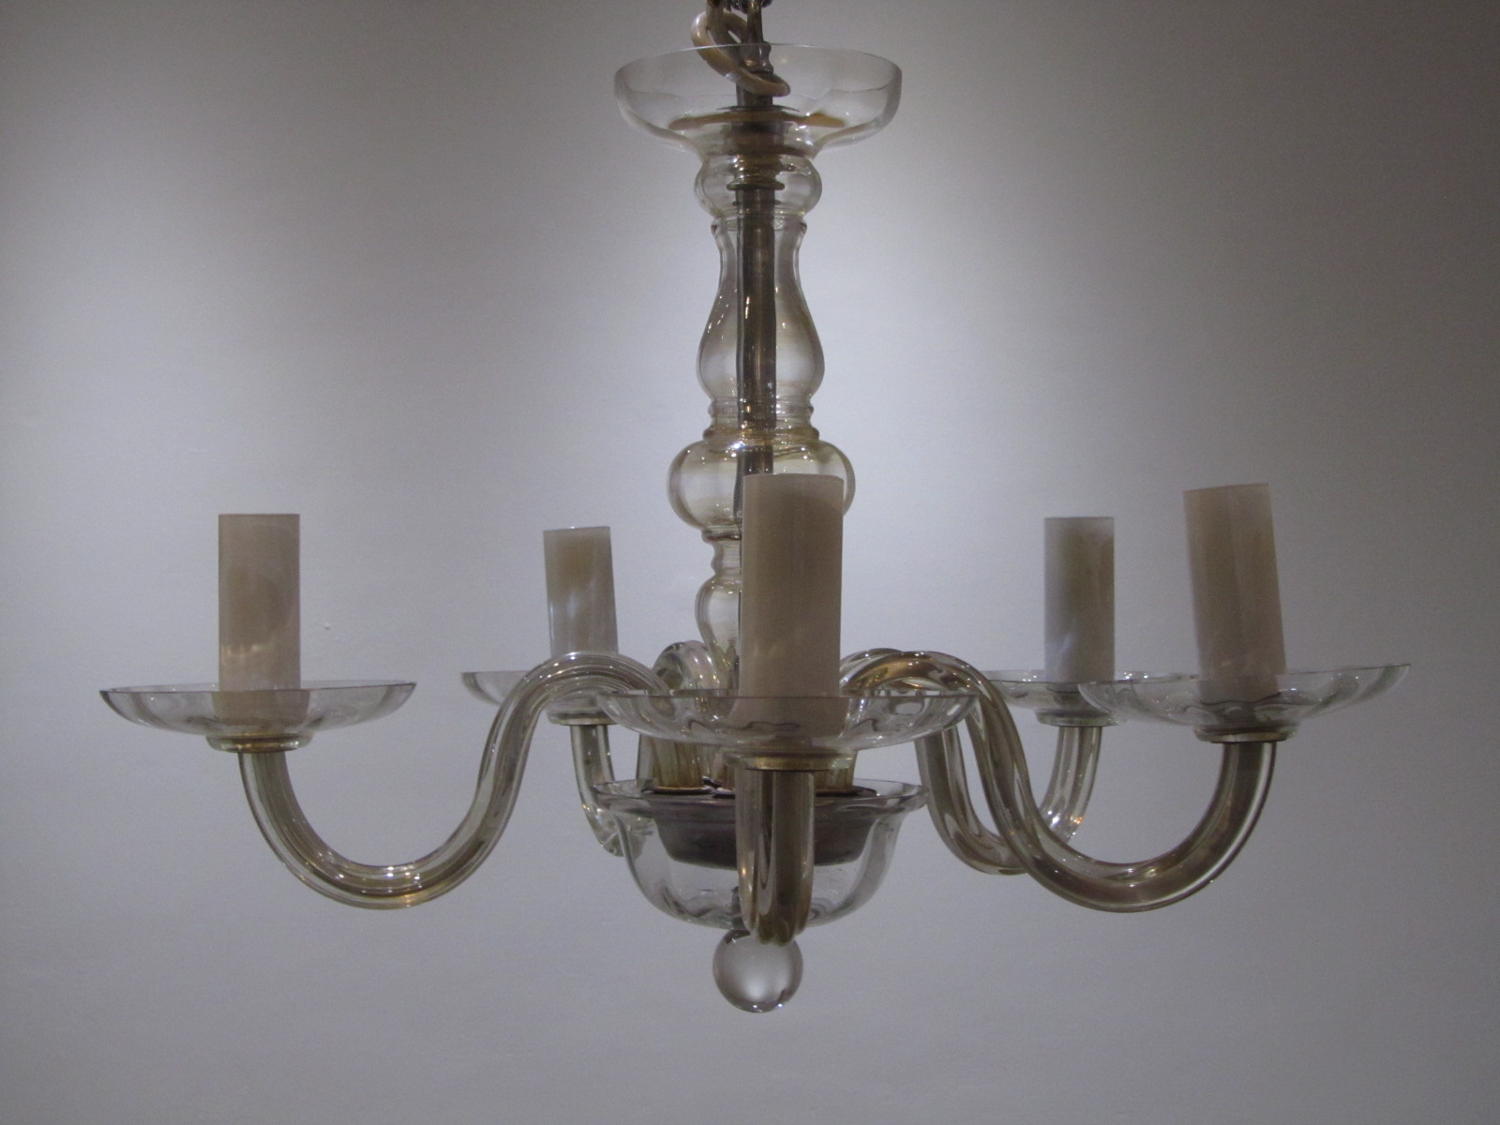 A Murano glass chandelier